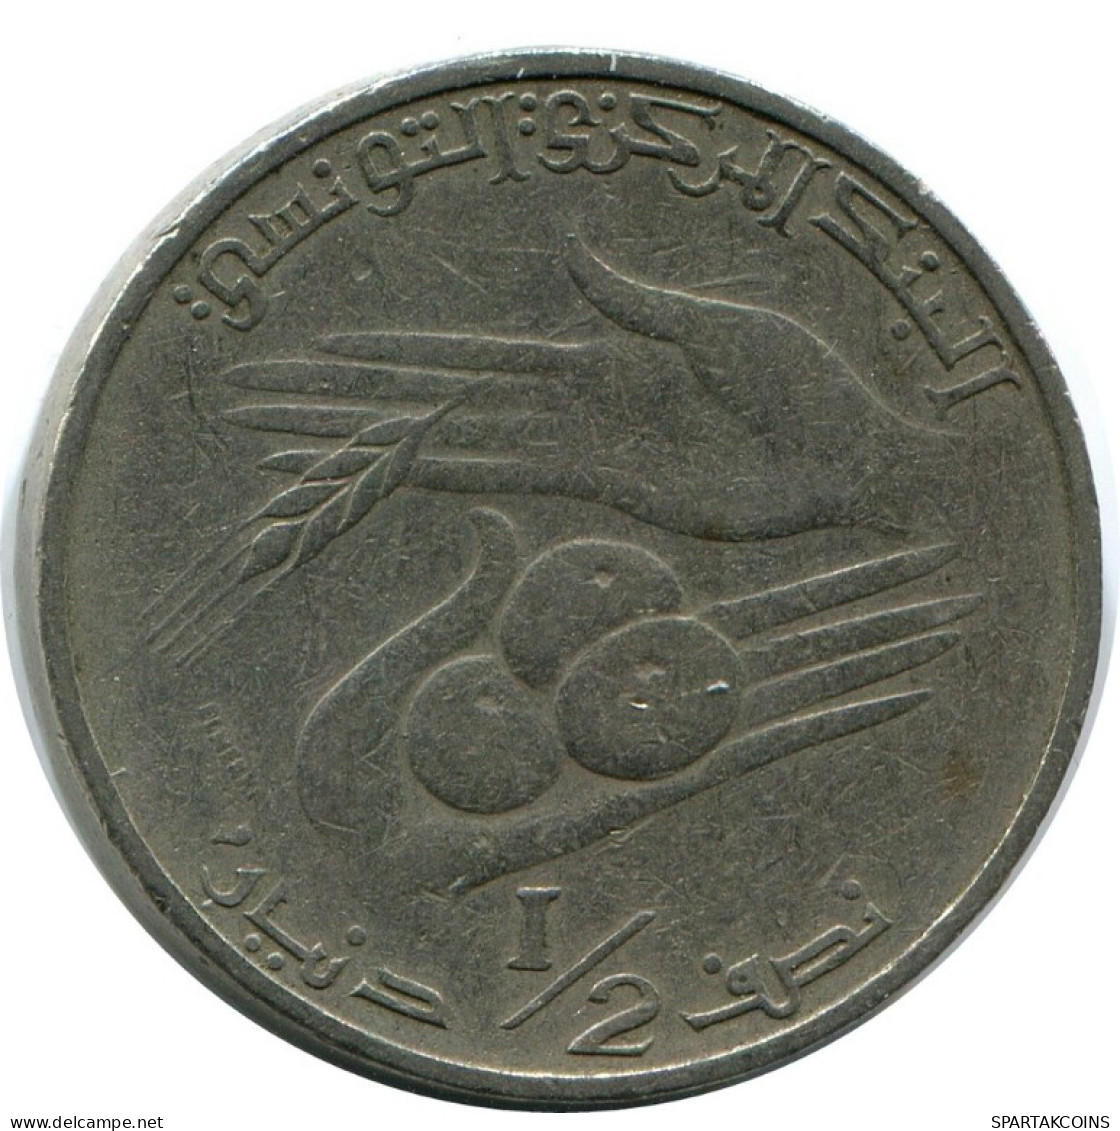 1/2 DINAR 1976 TUNESIEN TUNISIA Münze FAO #AK165.D.A - Tunesien